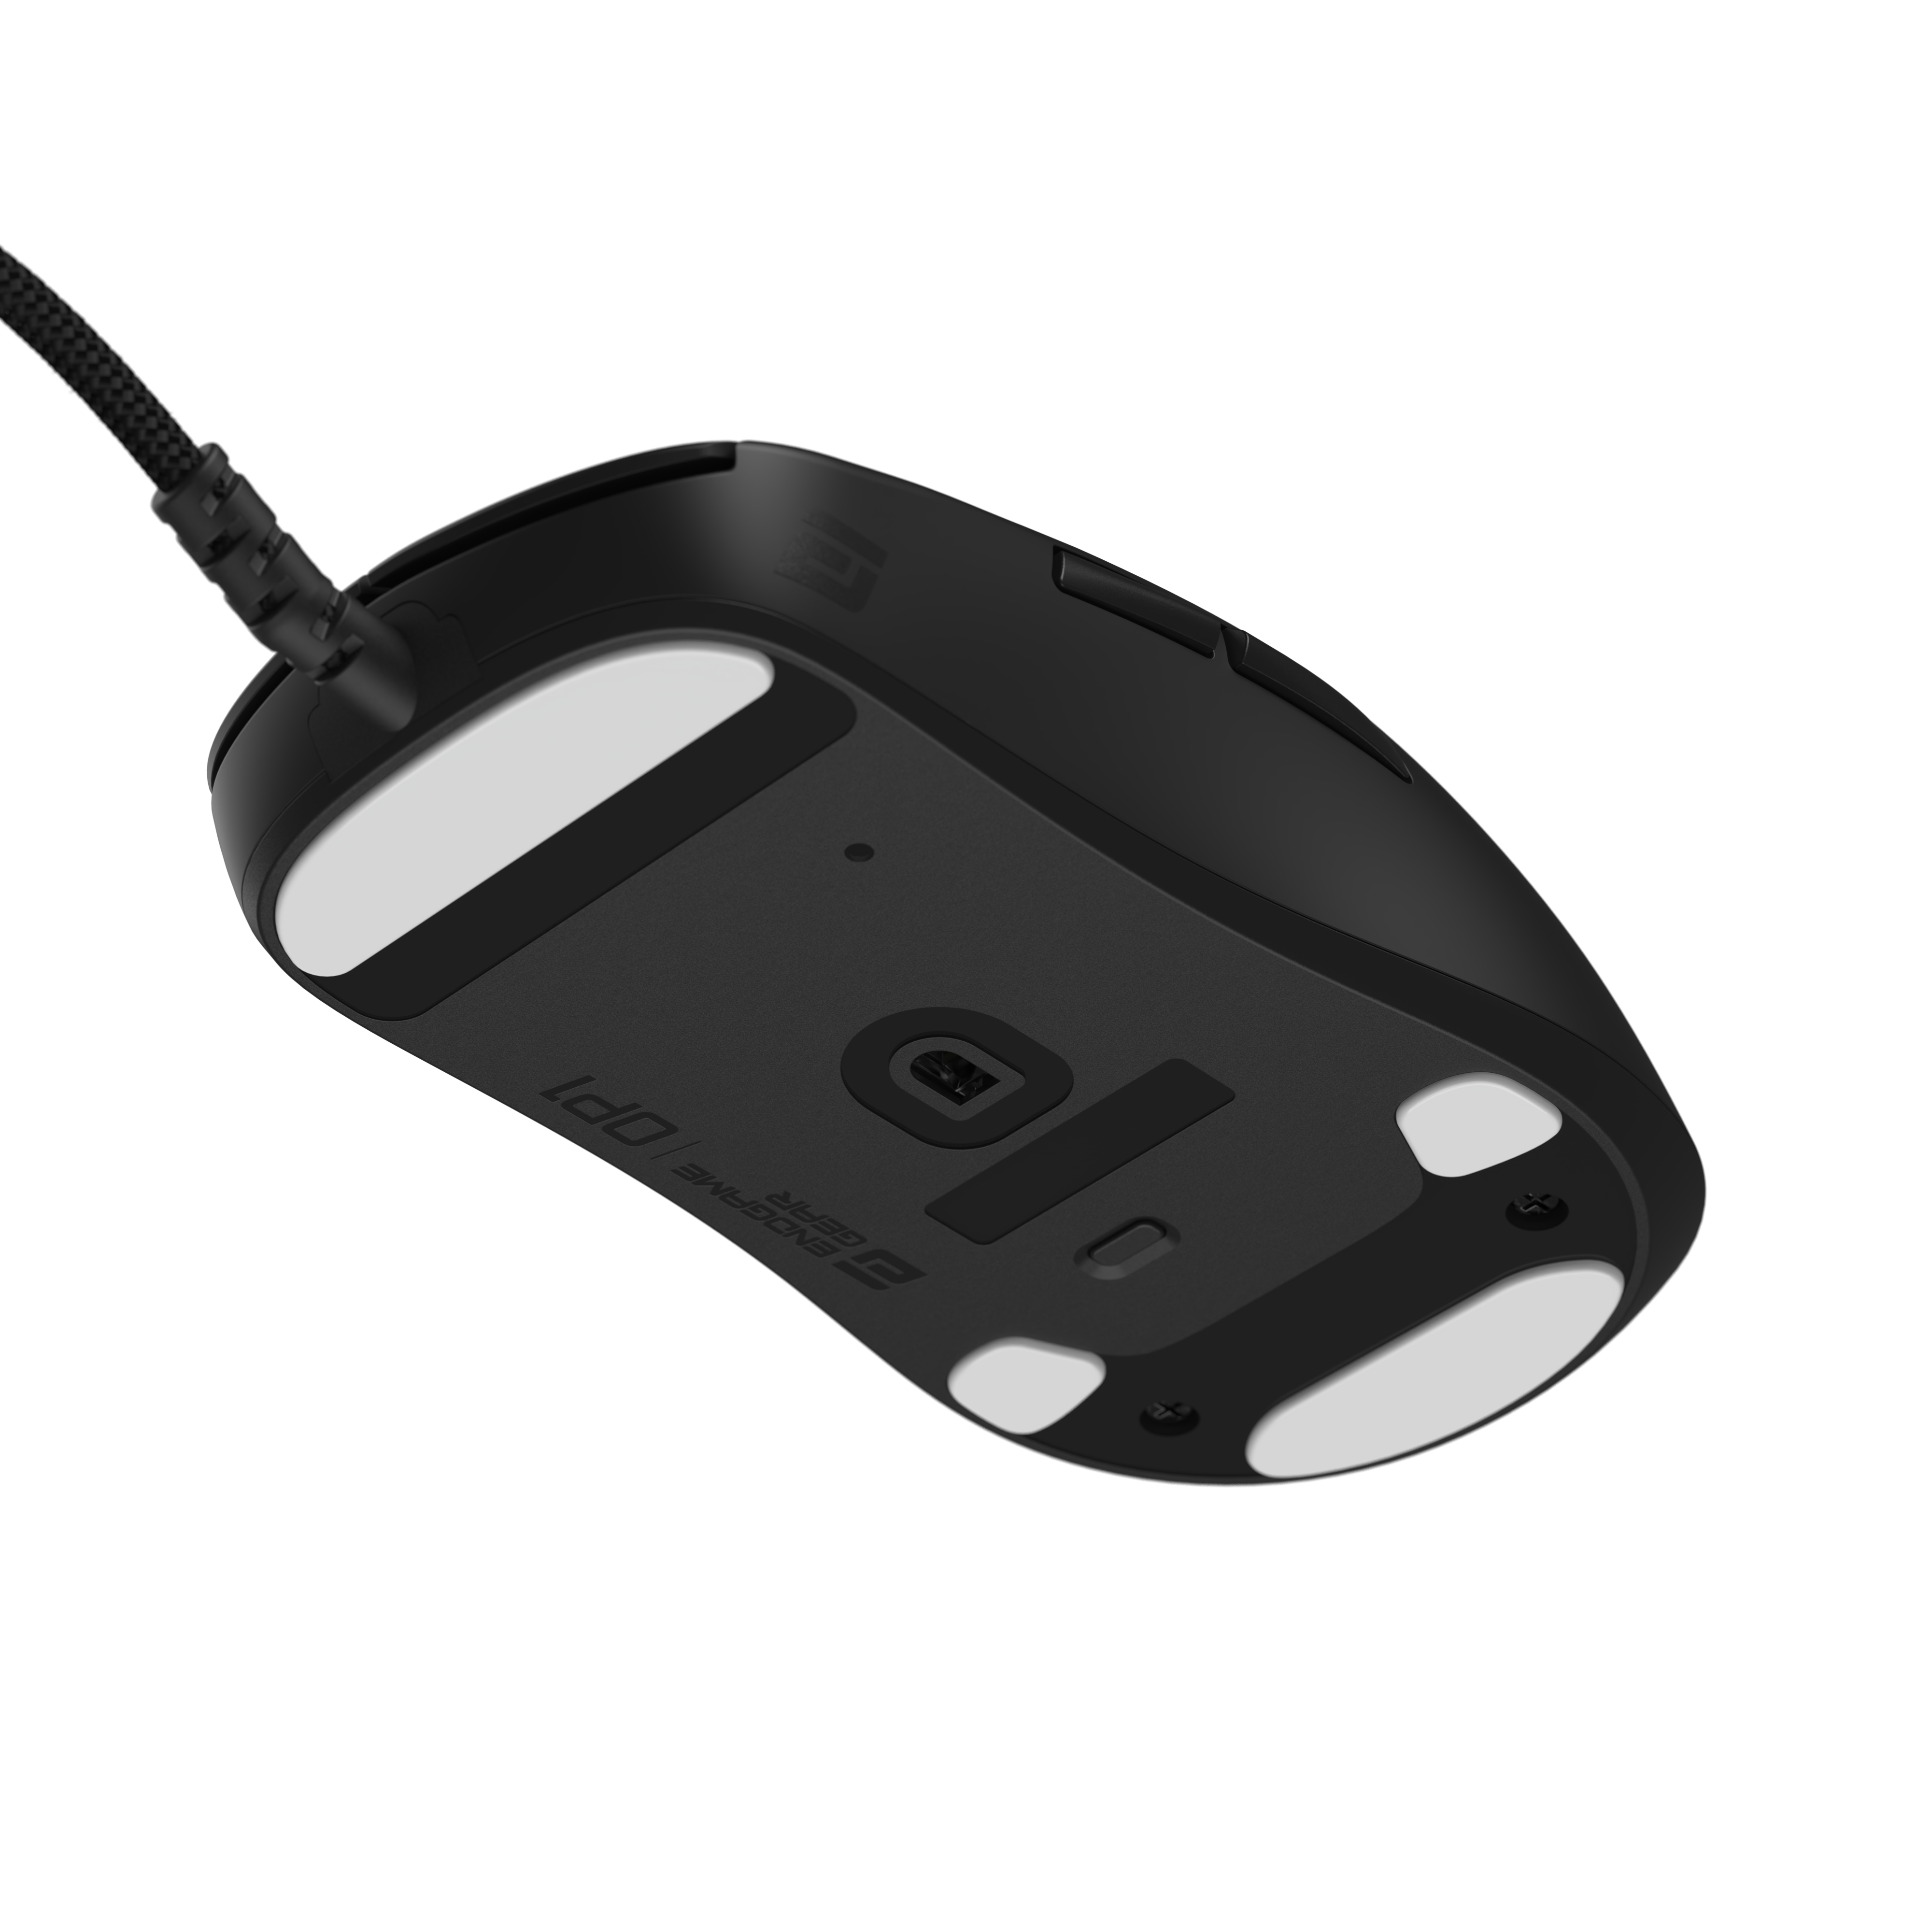 Endgame Gear - Endgame Gear OP1 8k USB Optical Gaming Mouse - Black